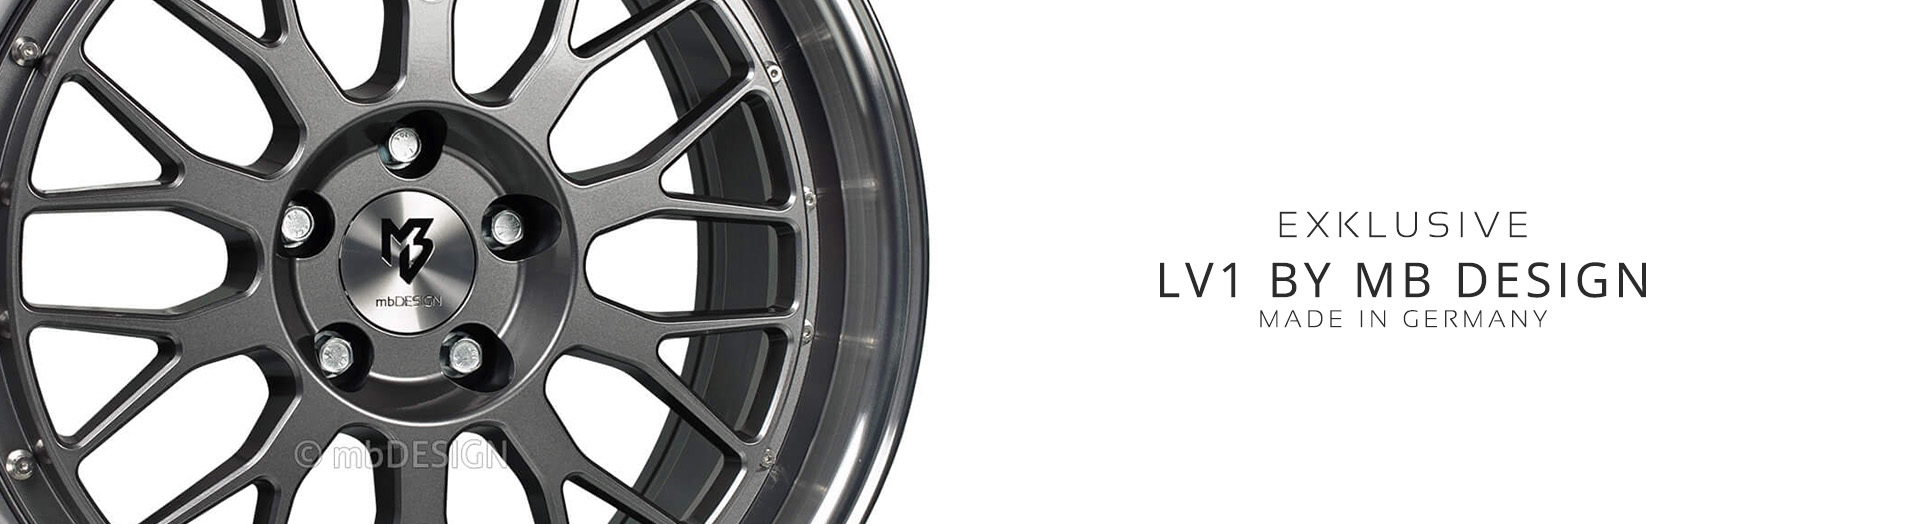 LV1 kaufen bei MB Design Felgen Online Shop